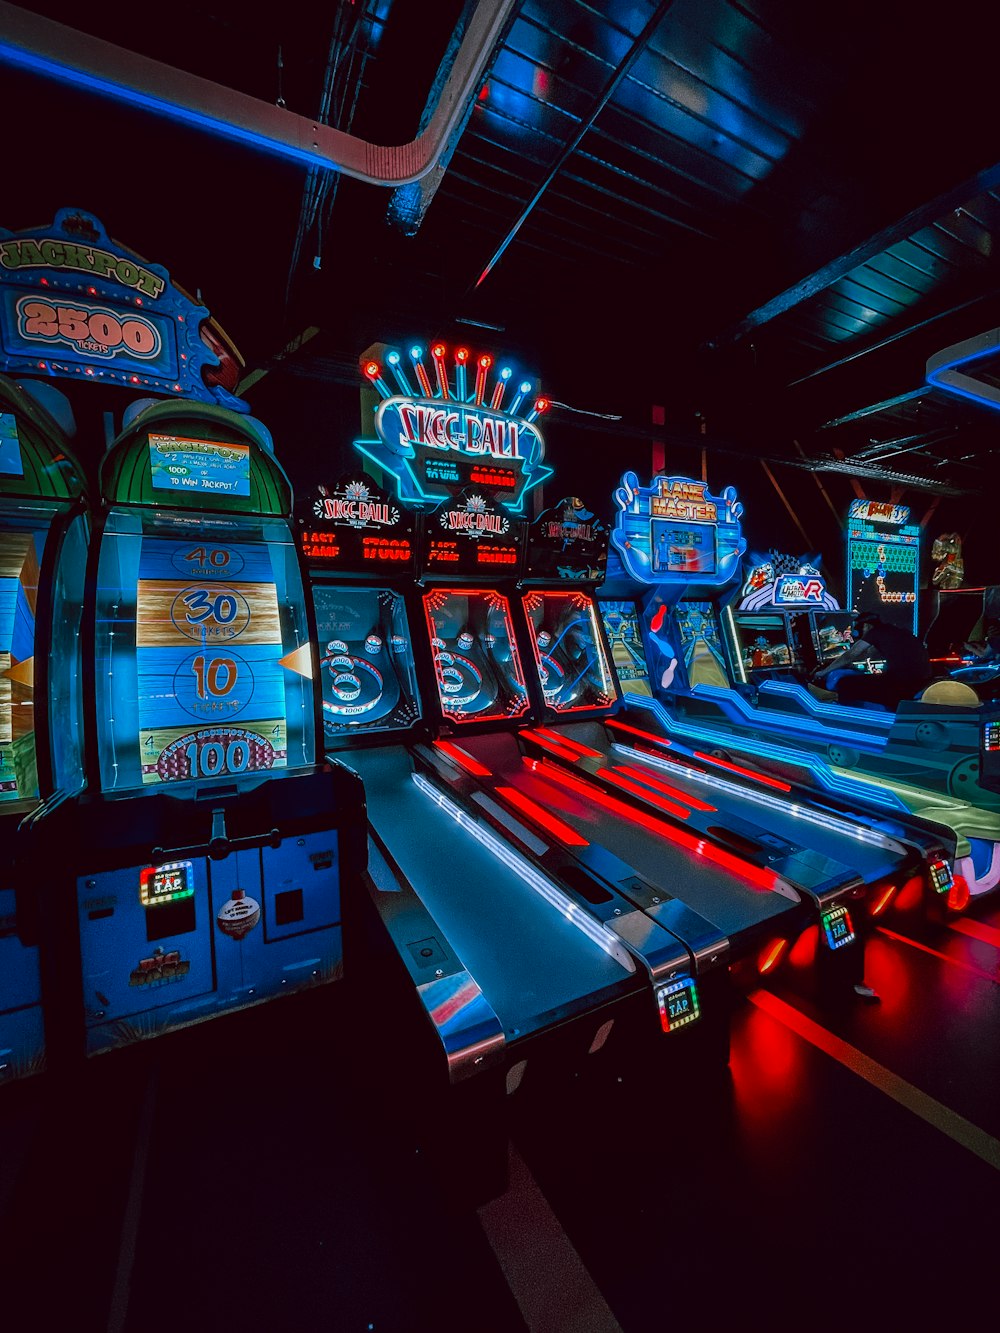 a row of arcade machines in a dark room